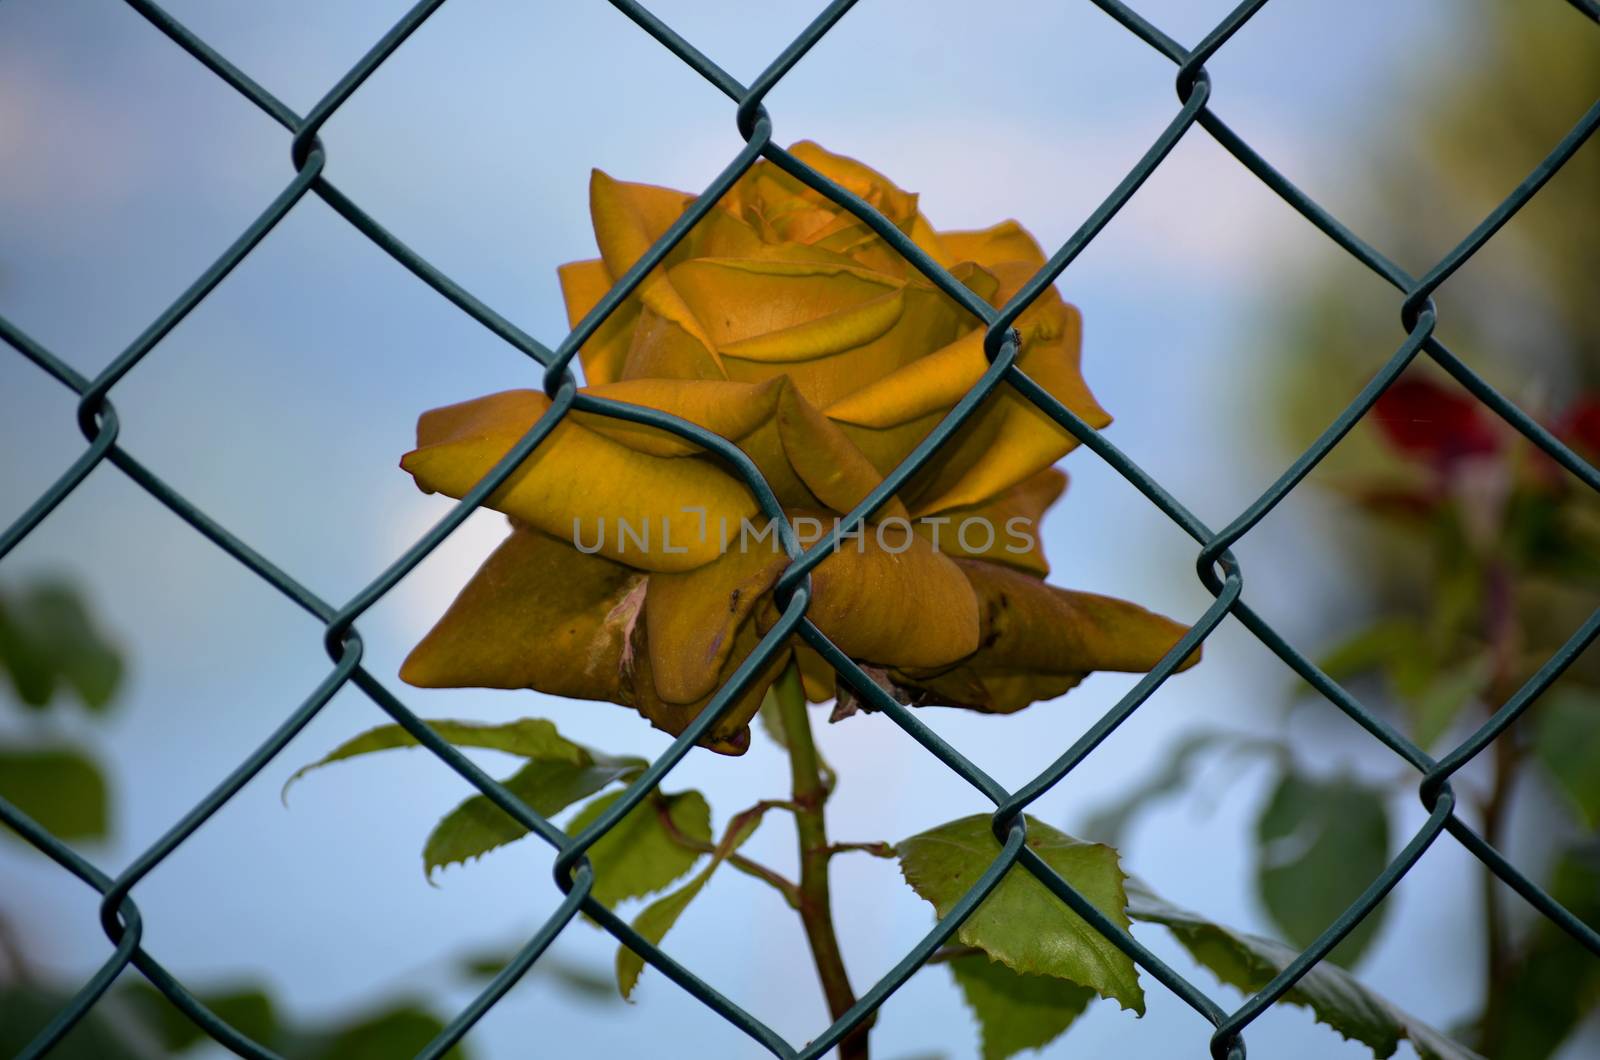 Rose imprisoned dried